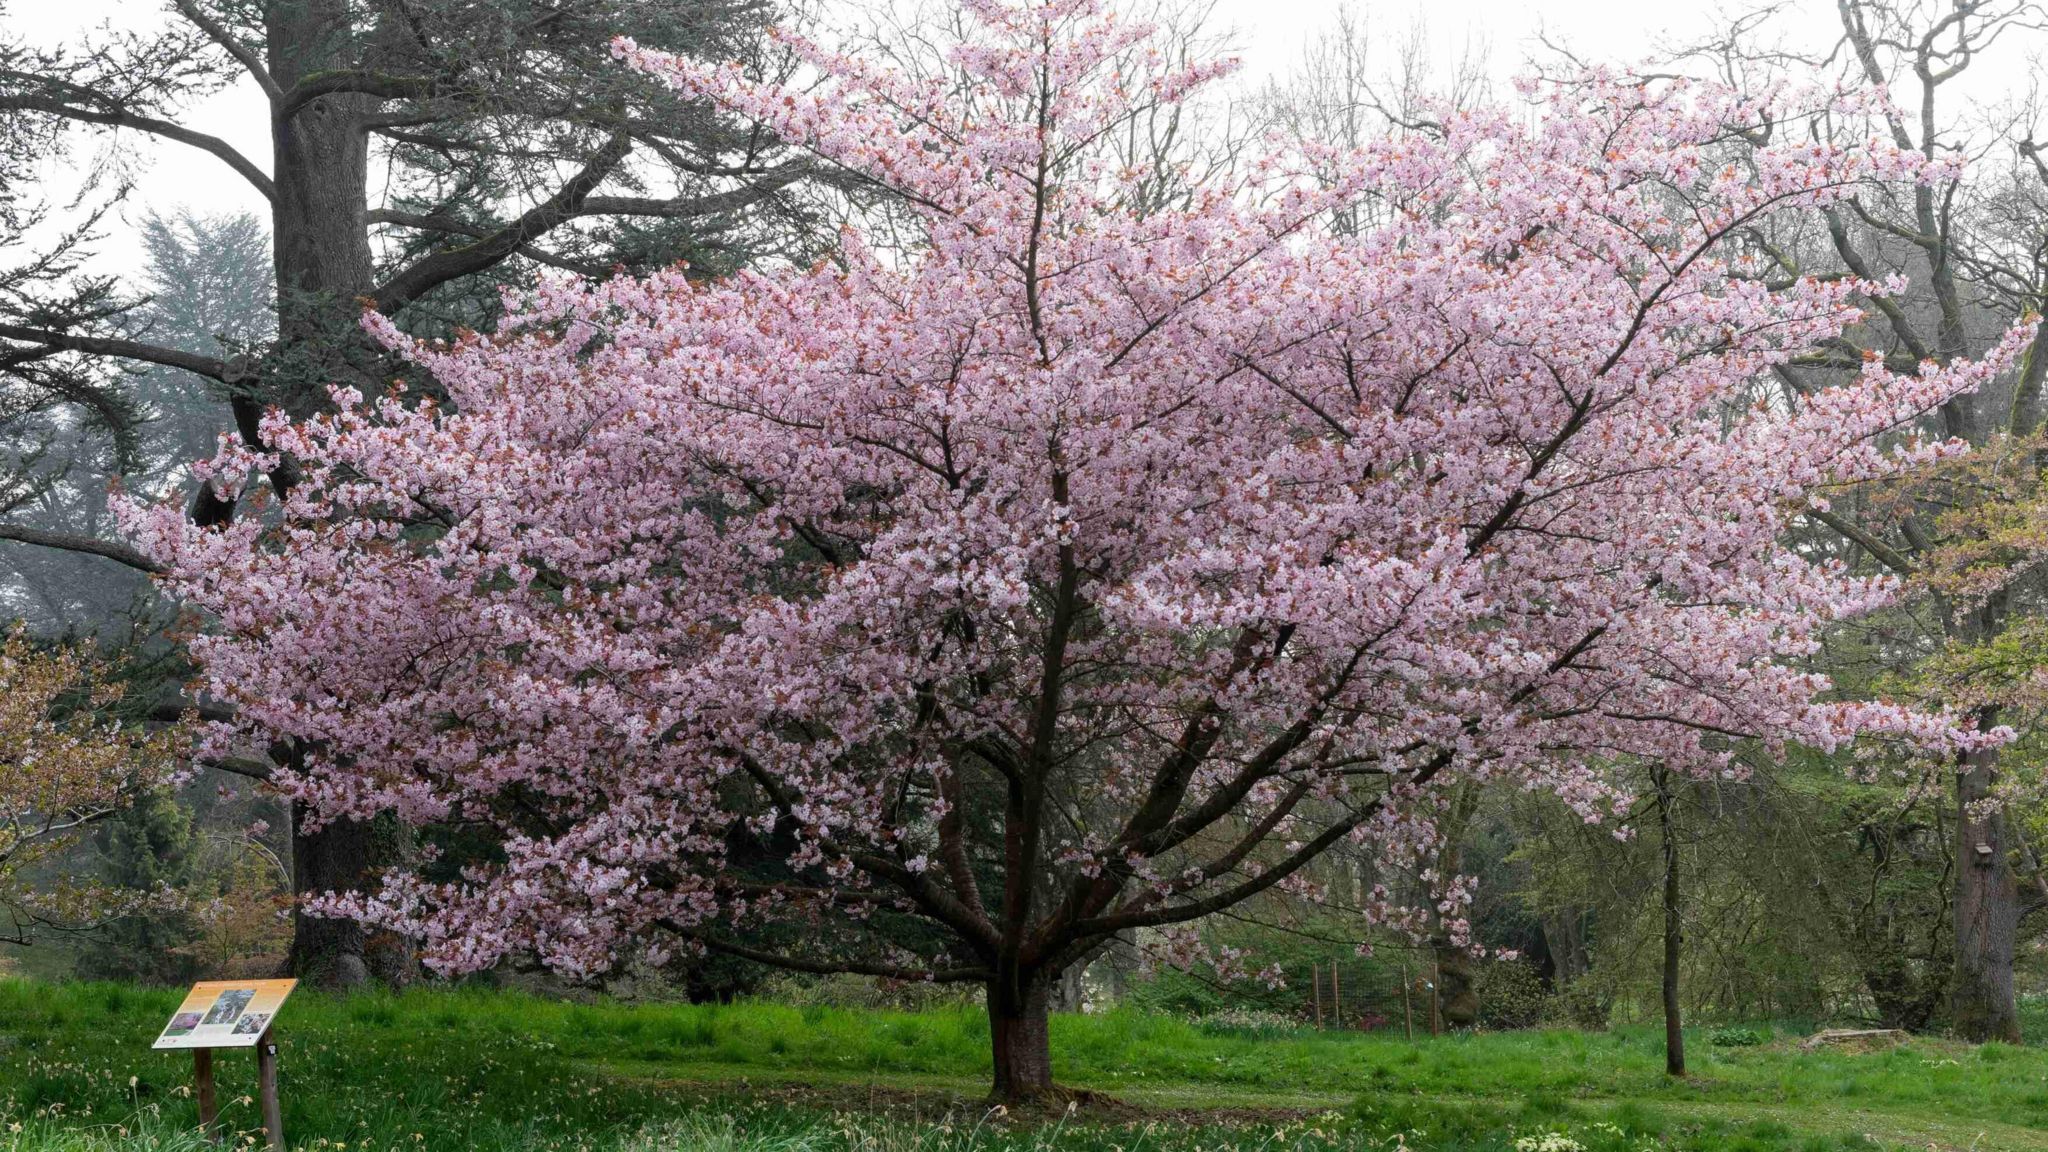 Japanese blossom tree at Batsford Arboretum